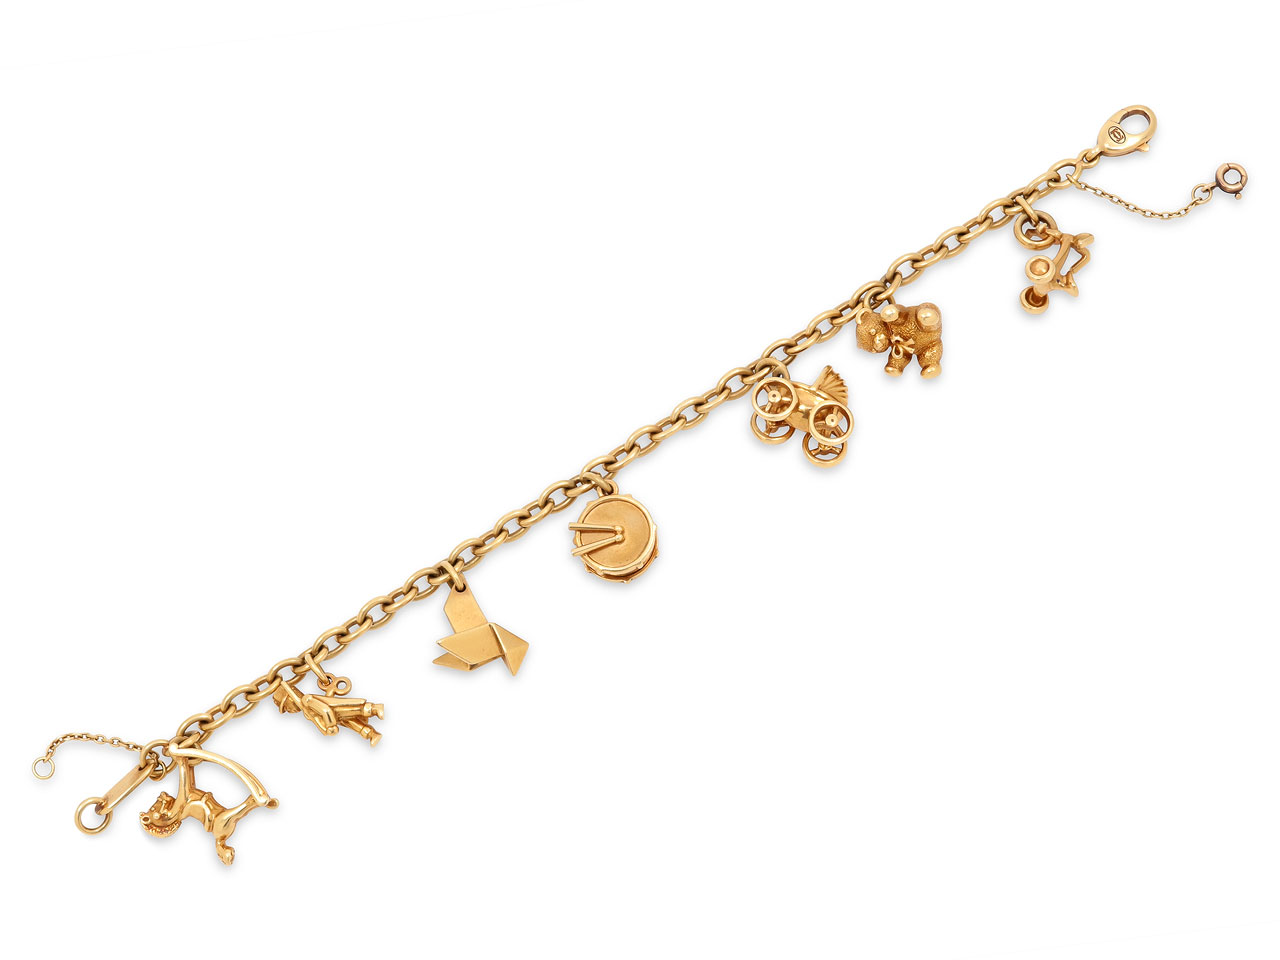 Cartier 'Growing Child' Charm Bracelet in 18K Gold